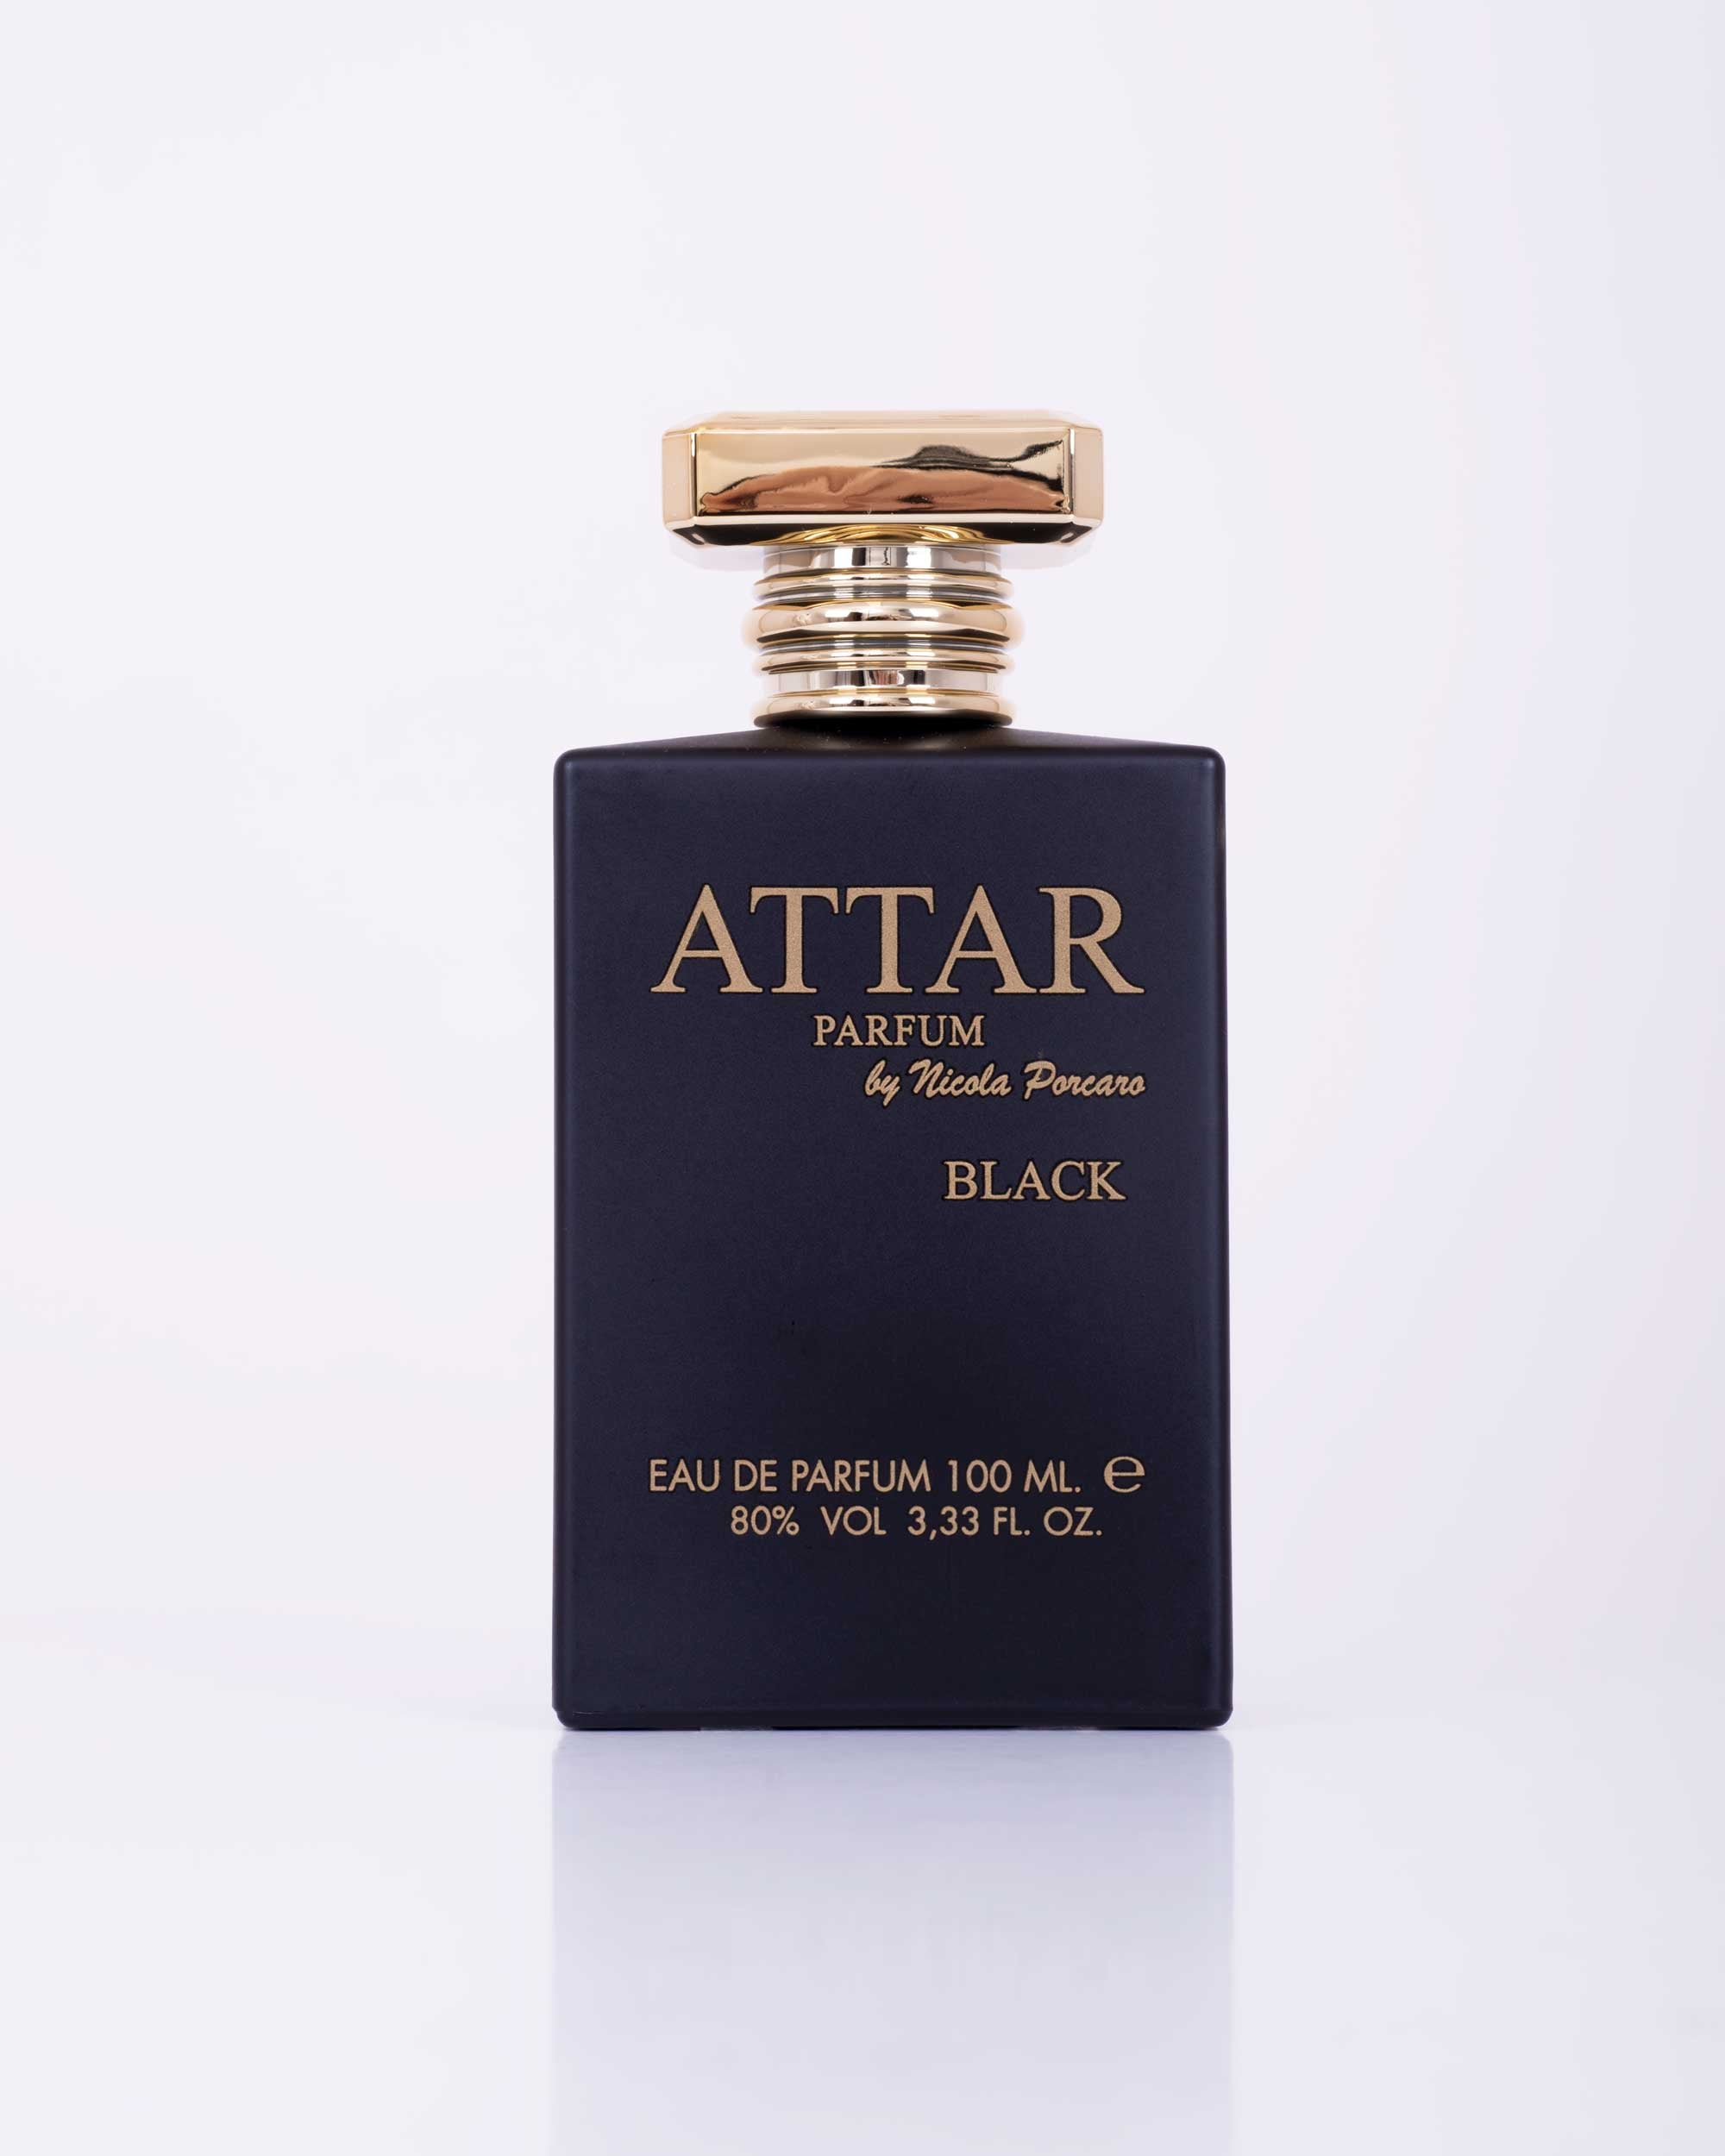 ATTAR Parfum Black